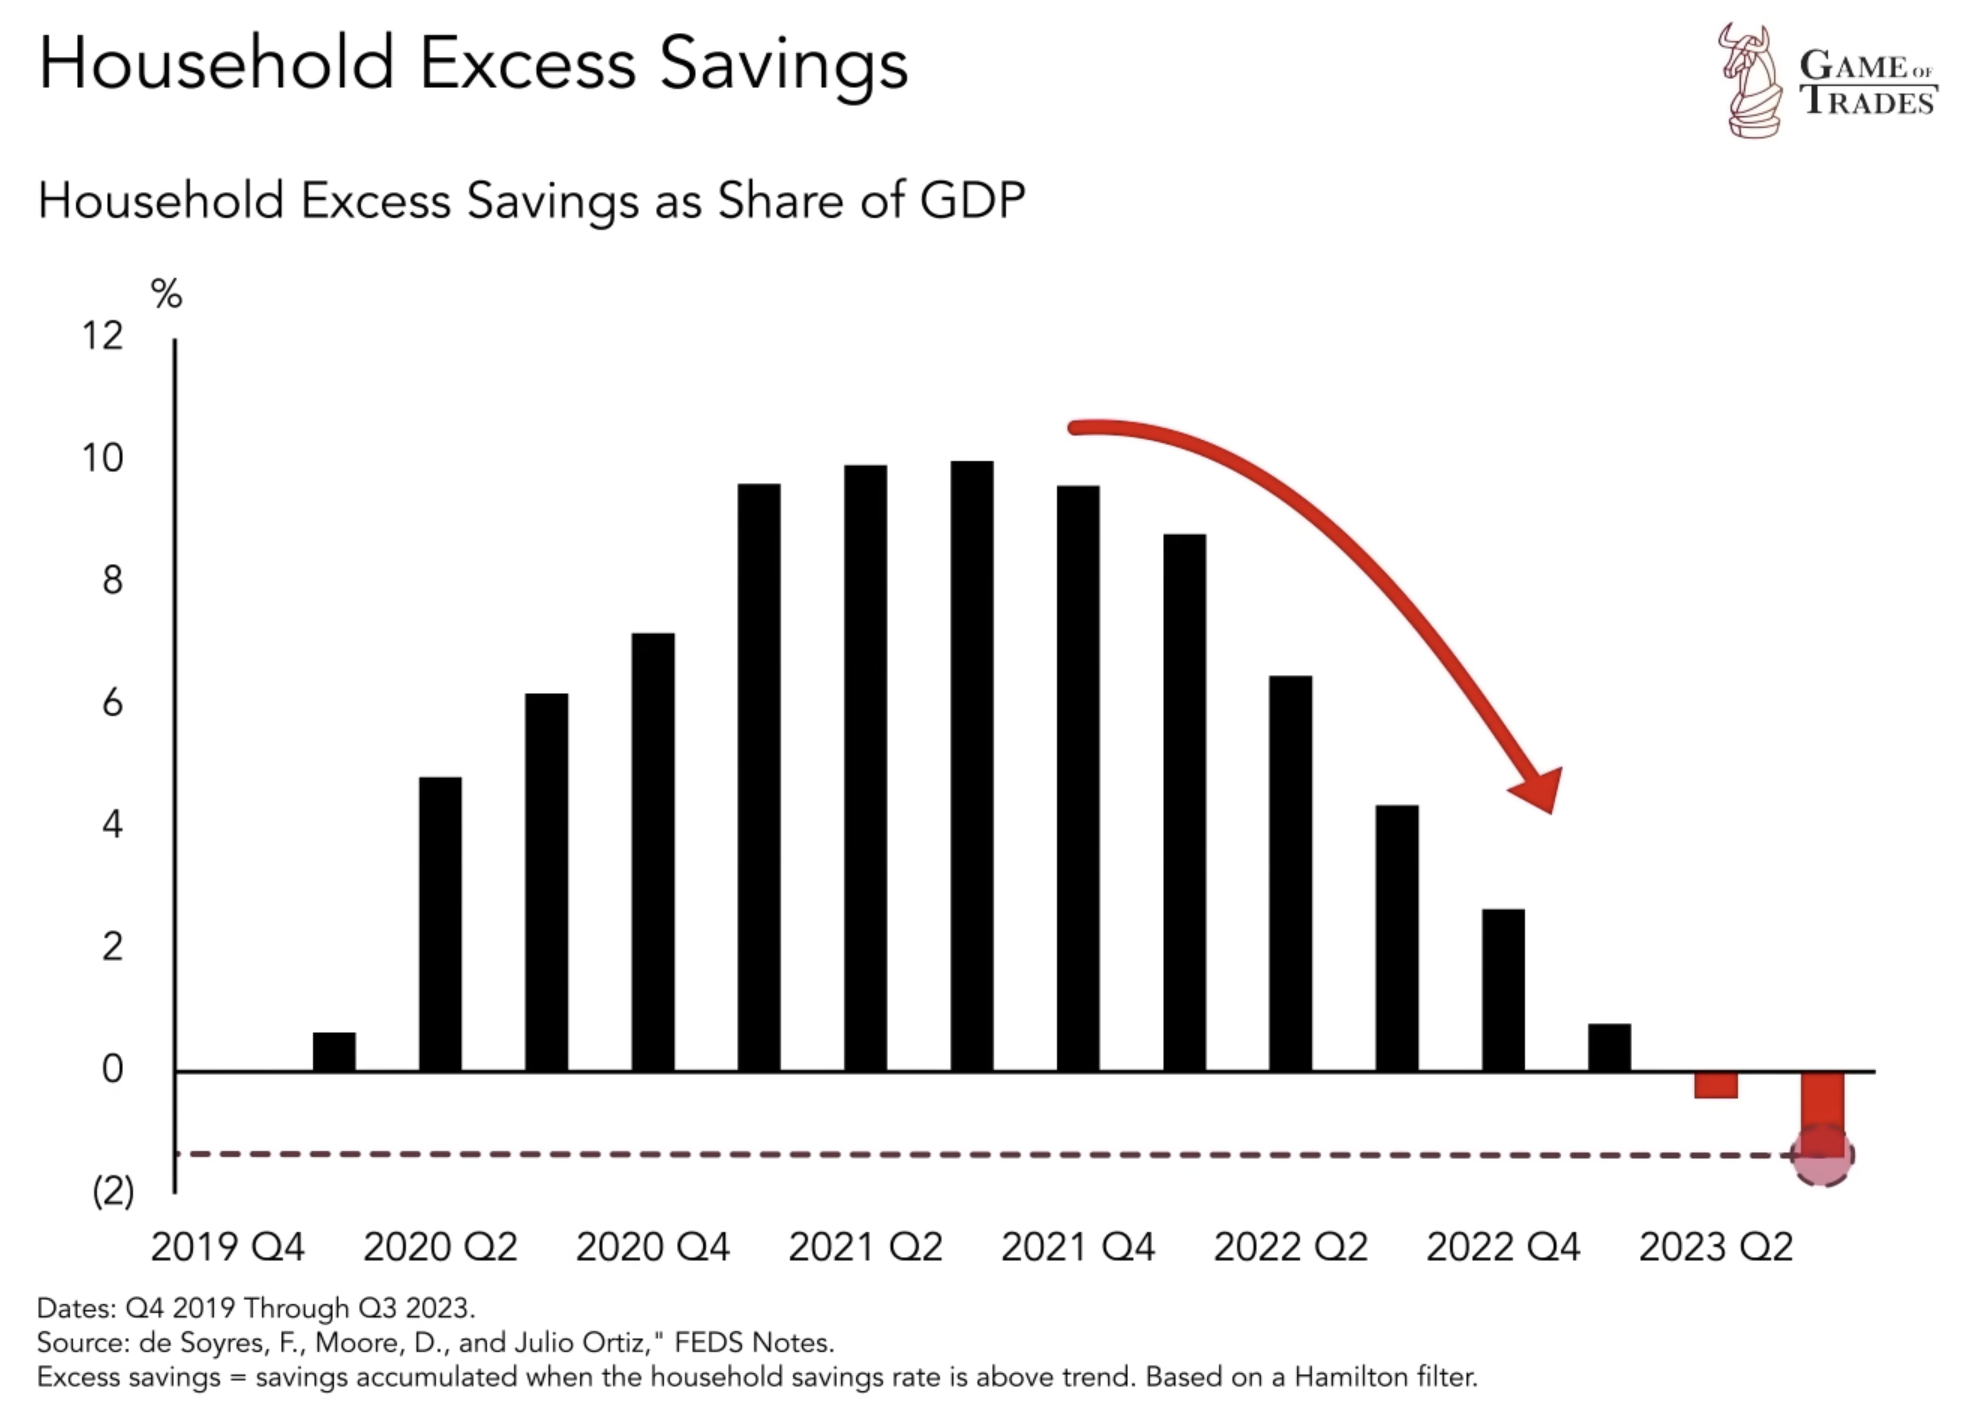 Household Excess Savings Data